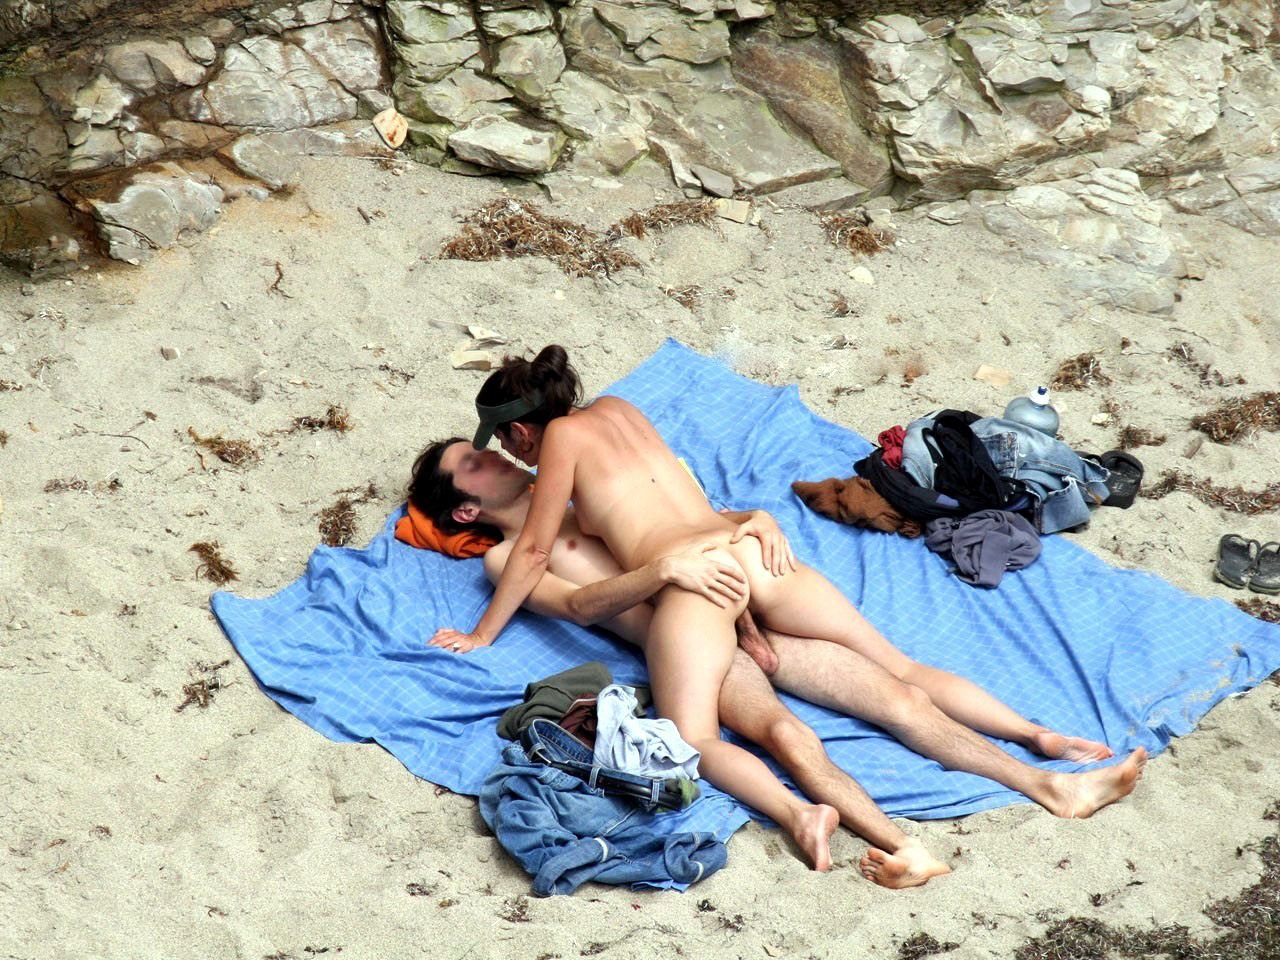 Hidden camera on the nudist beach picture